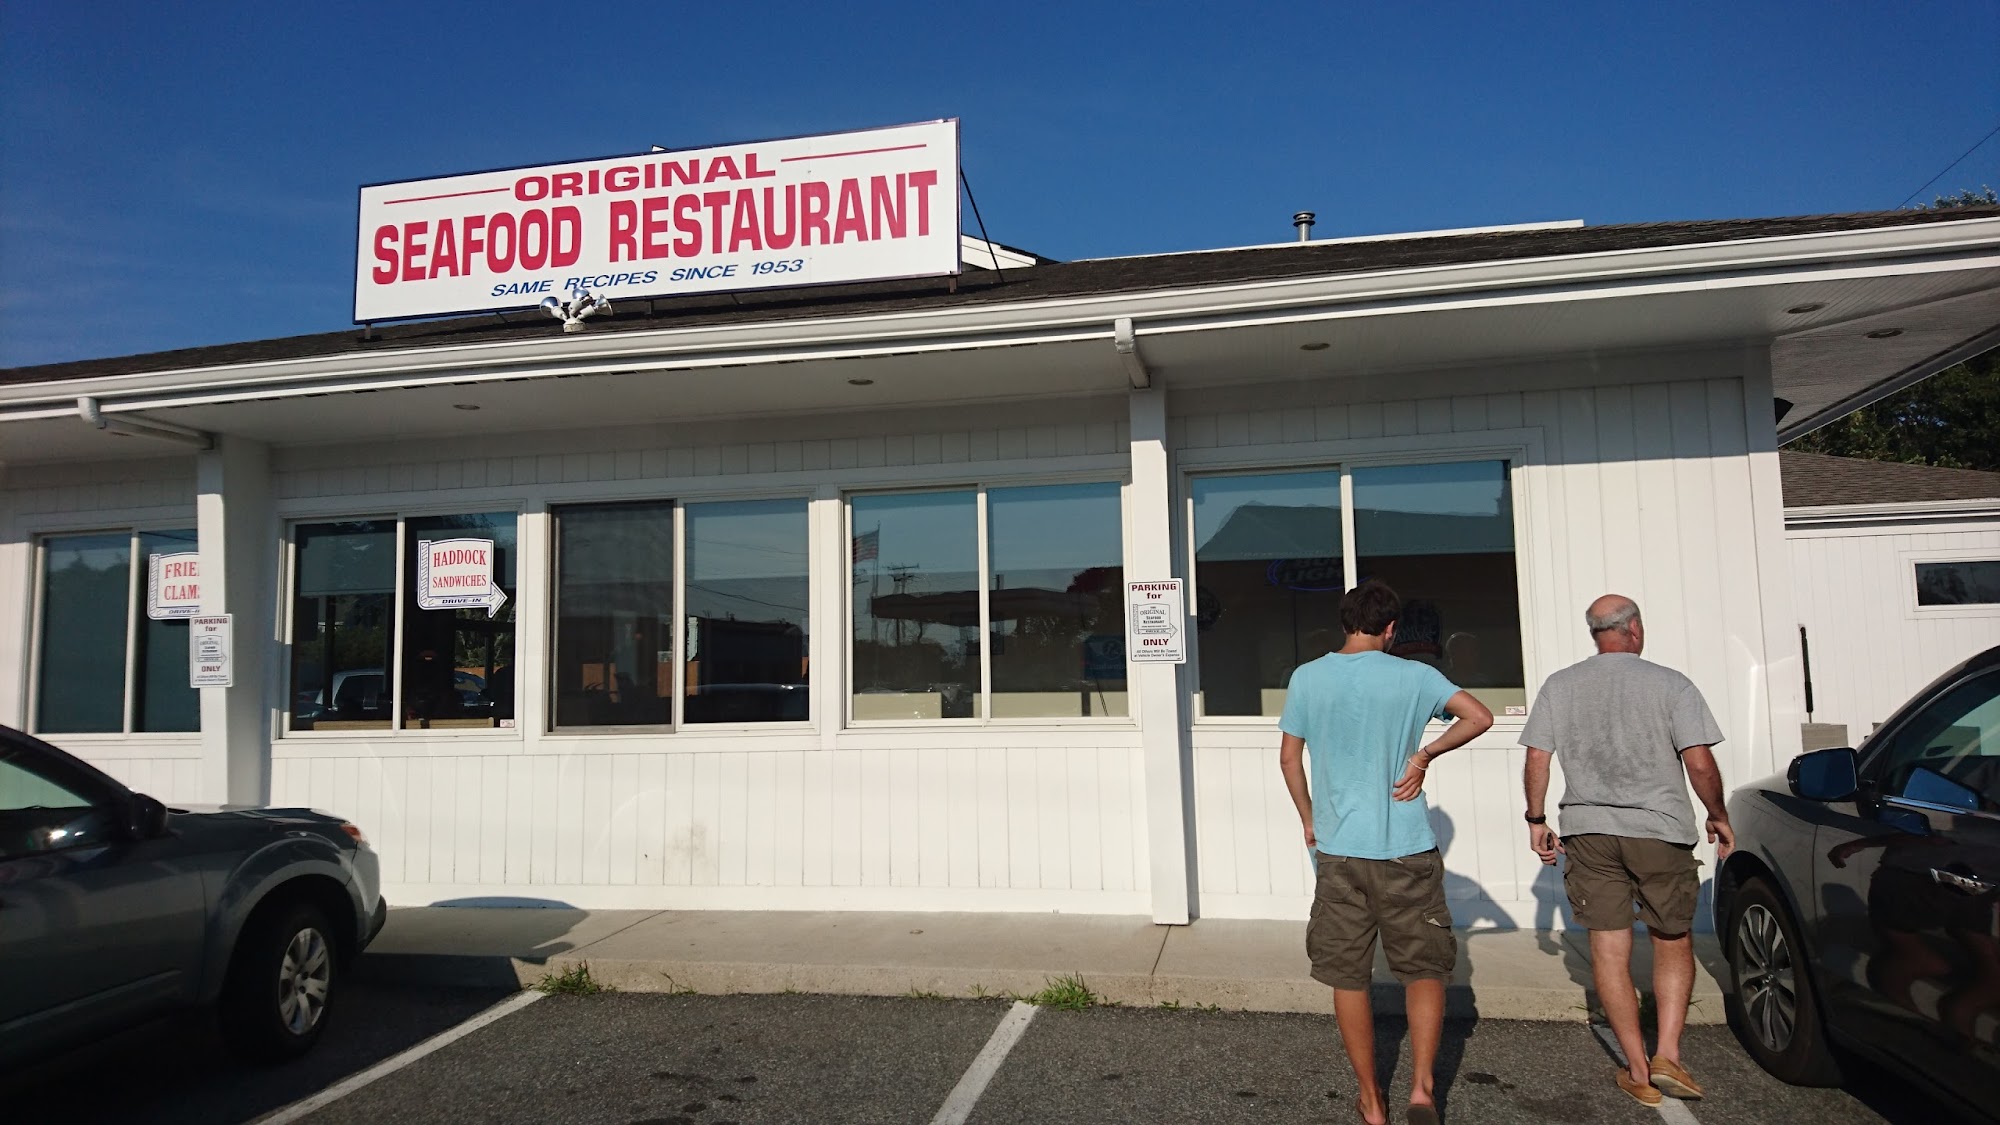 The Original Seafood Restaurant